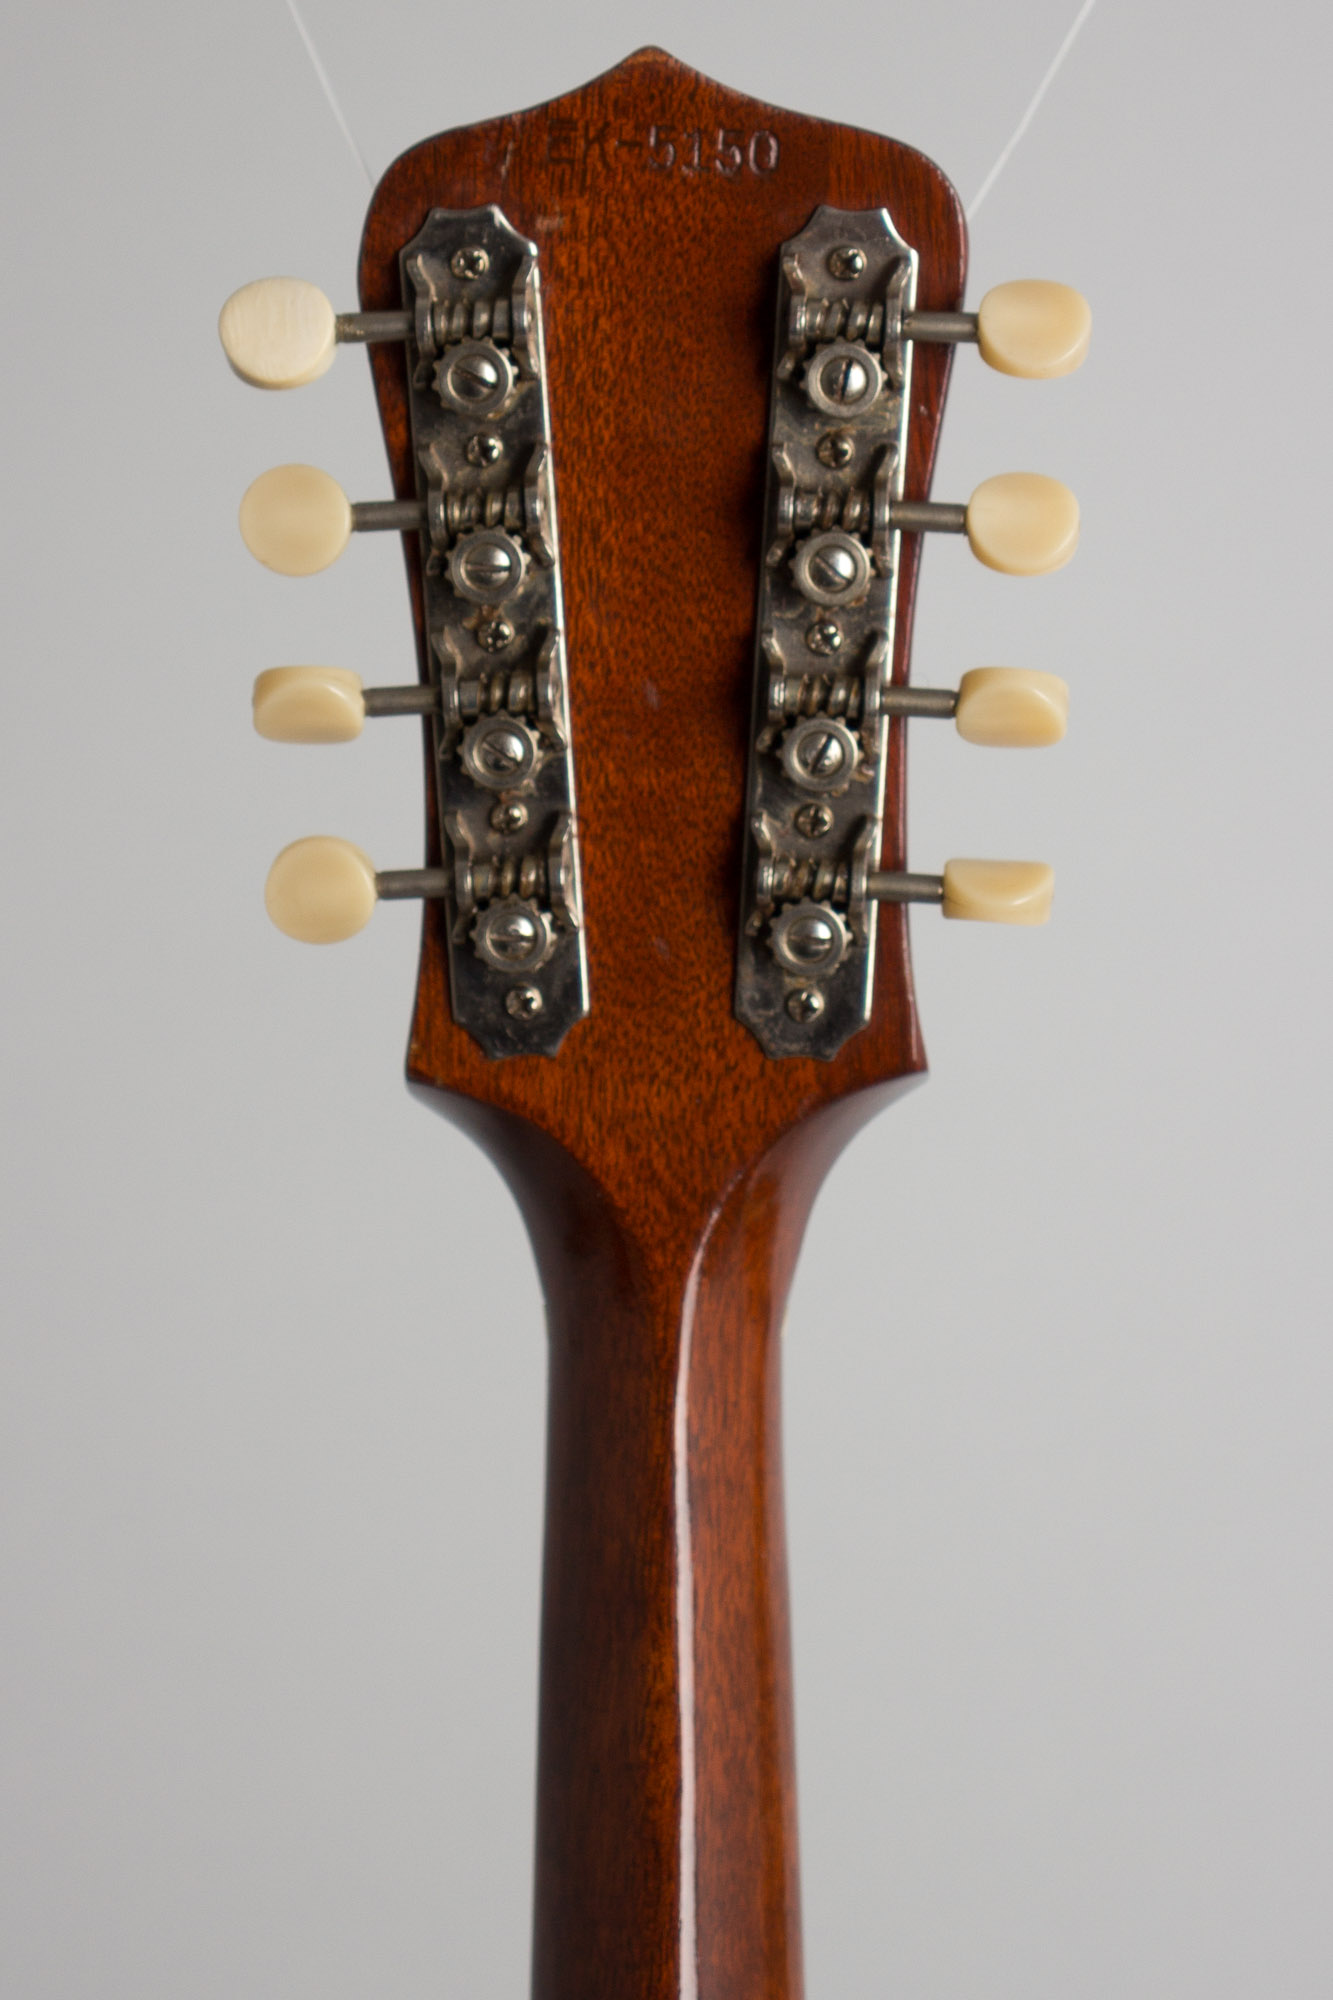 RetroFret Vintage Guitars